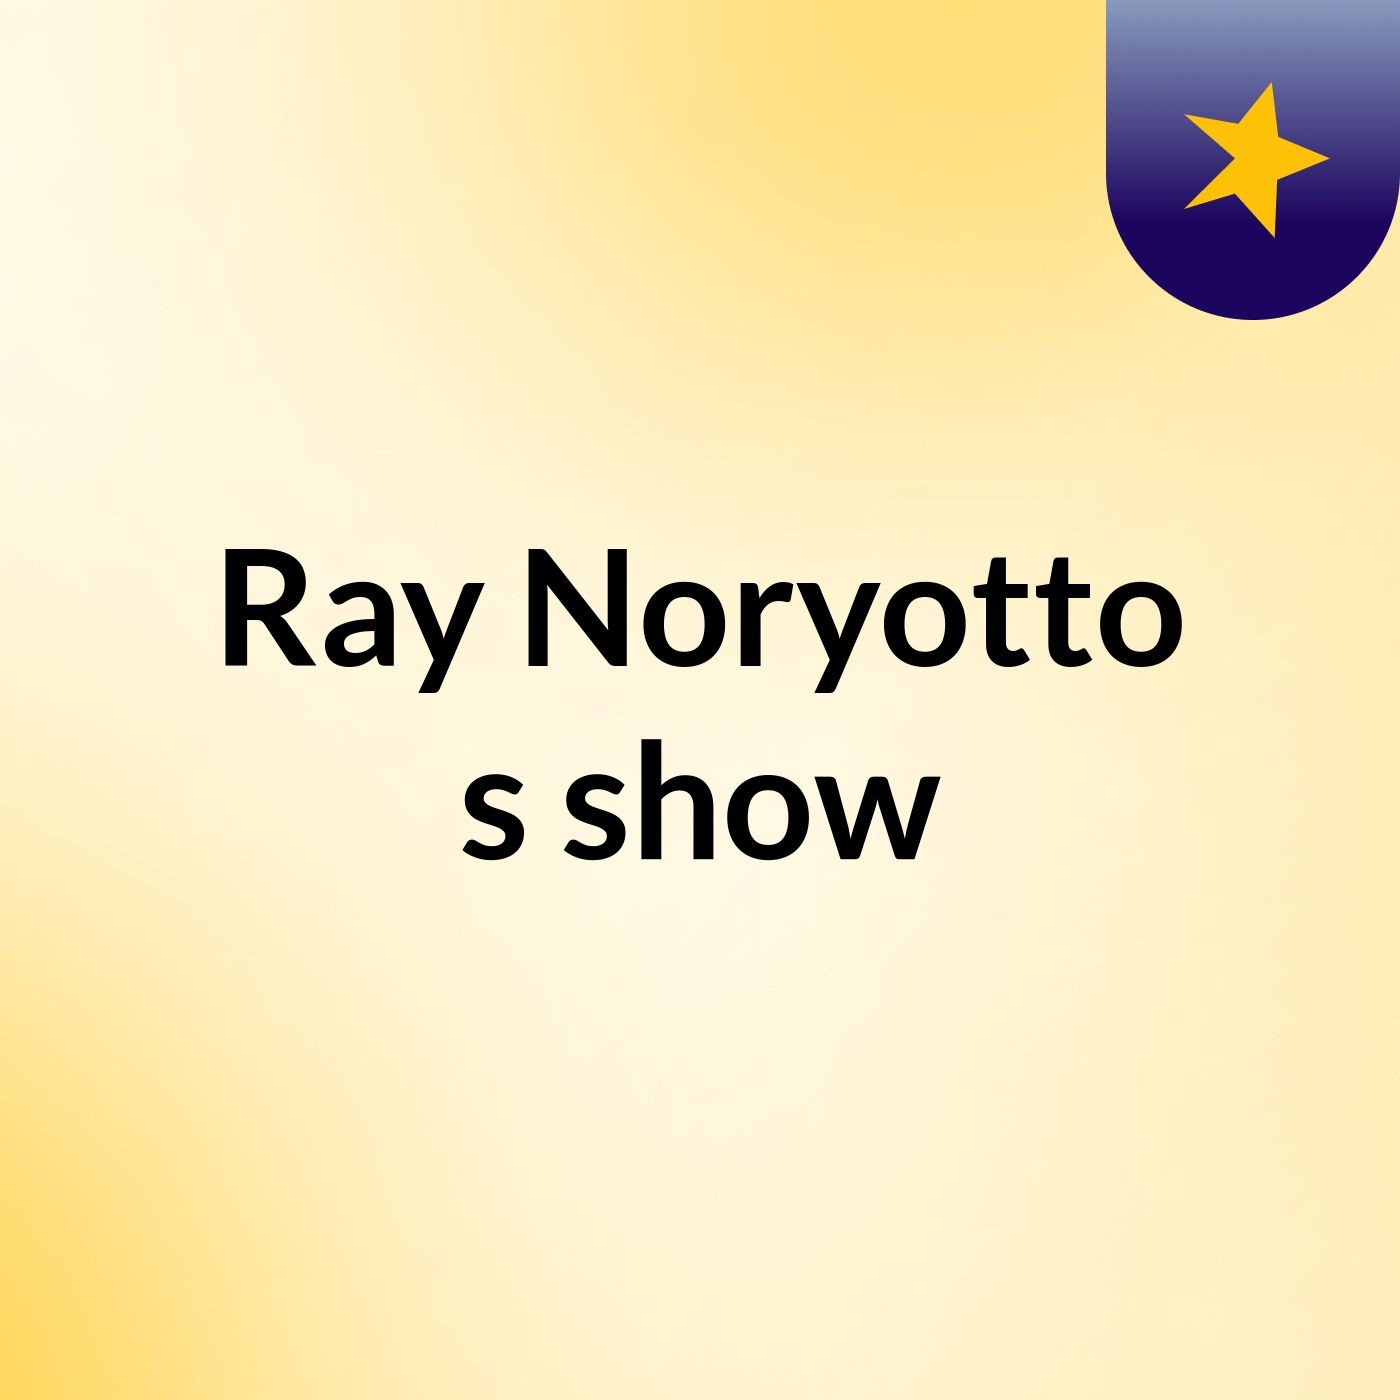 Ray Noryotto's show